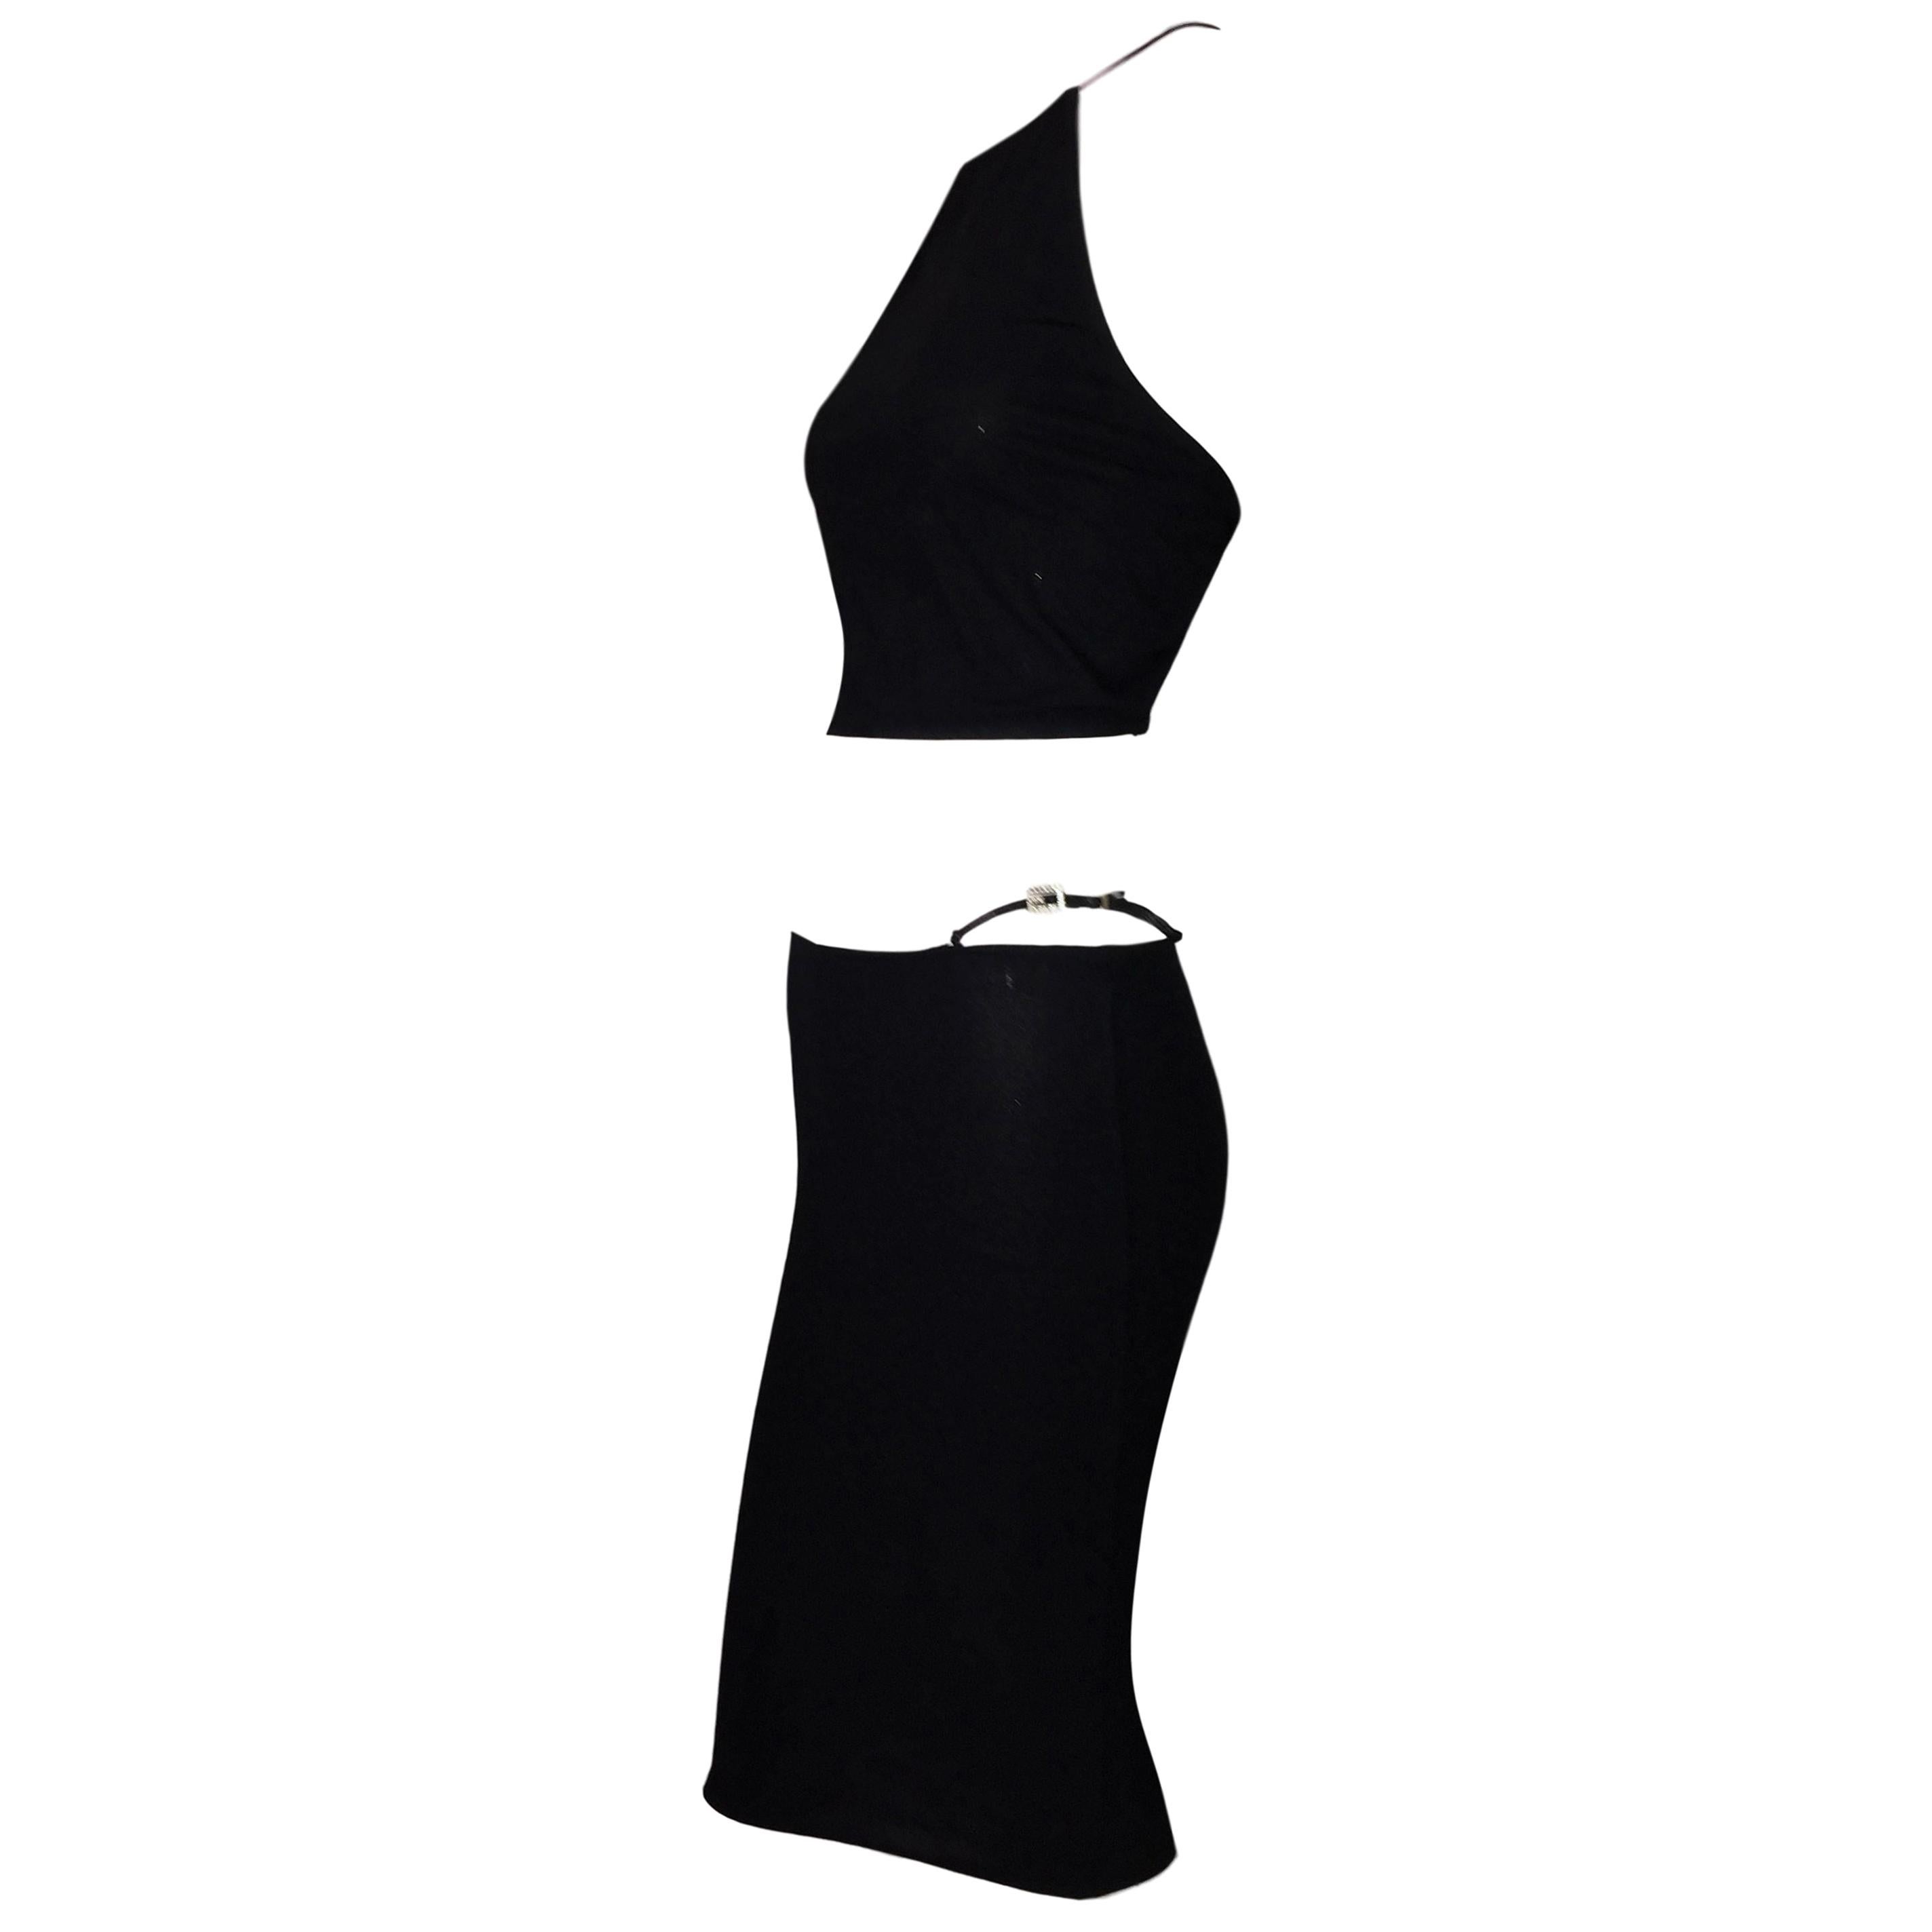 S/S 1998 Gucci Tom Ford Runway Black Backless Crop Top & Crystal G Skirt Set